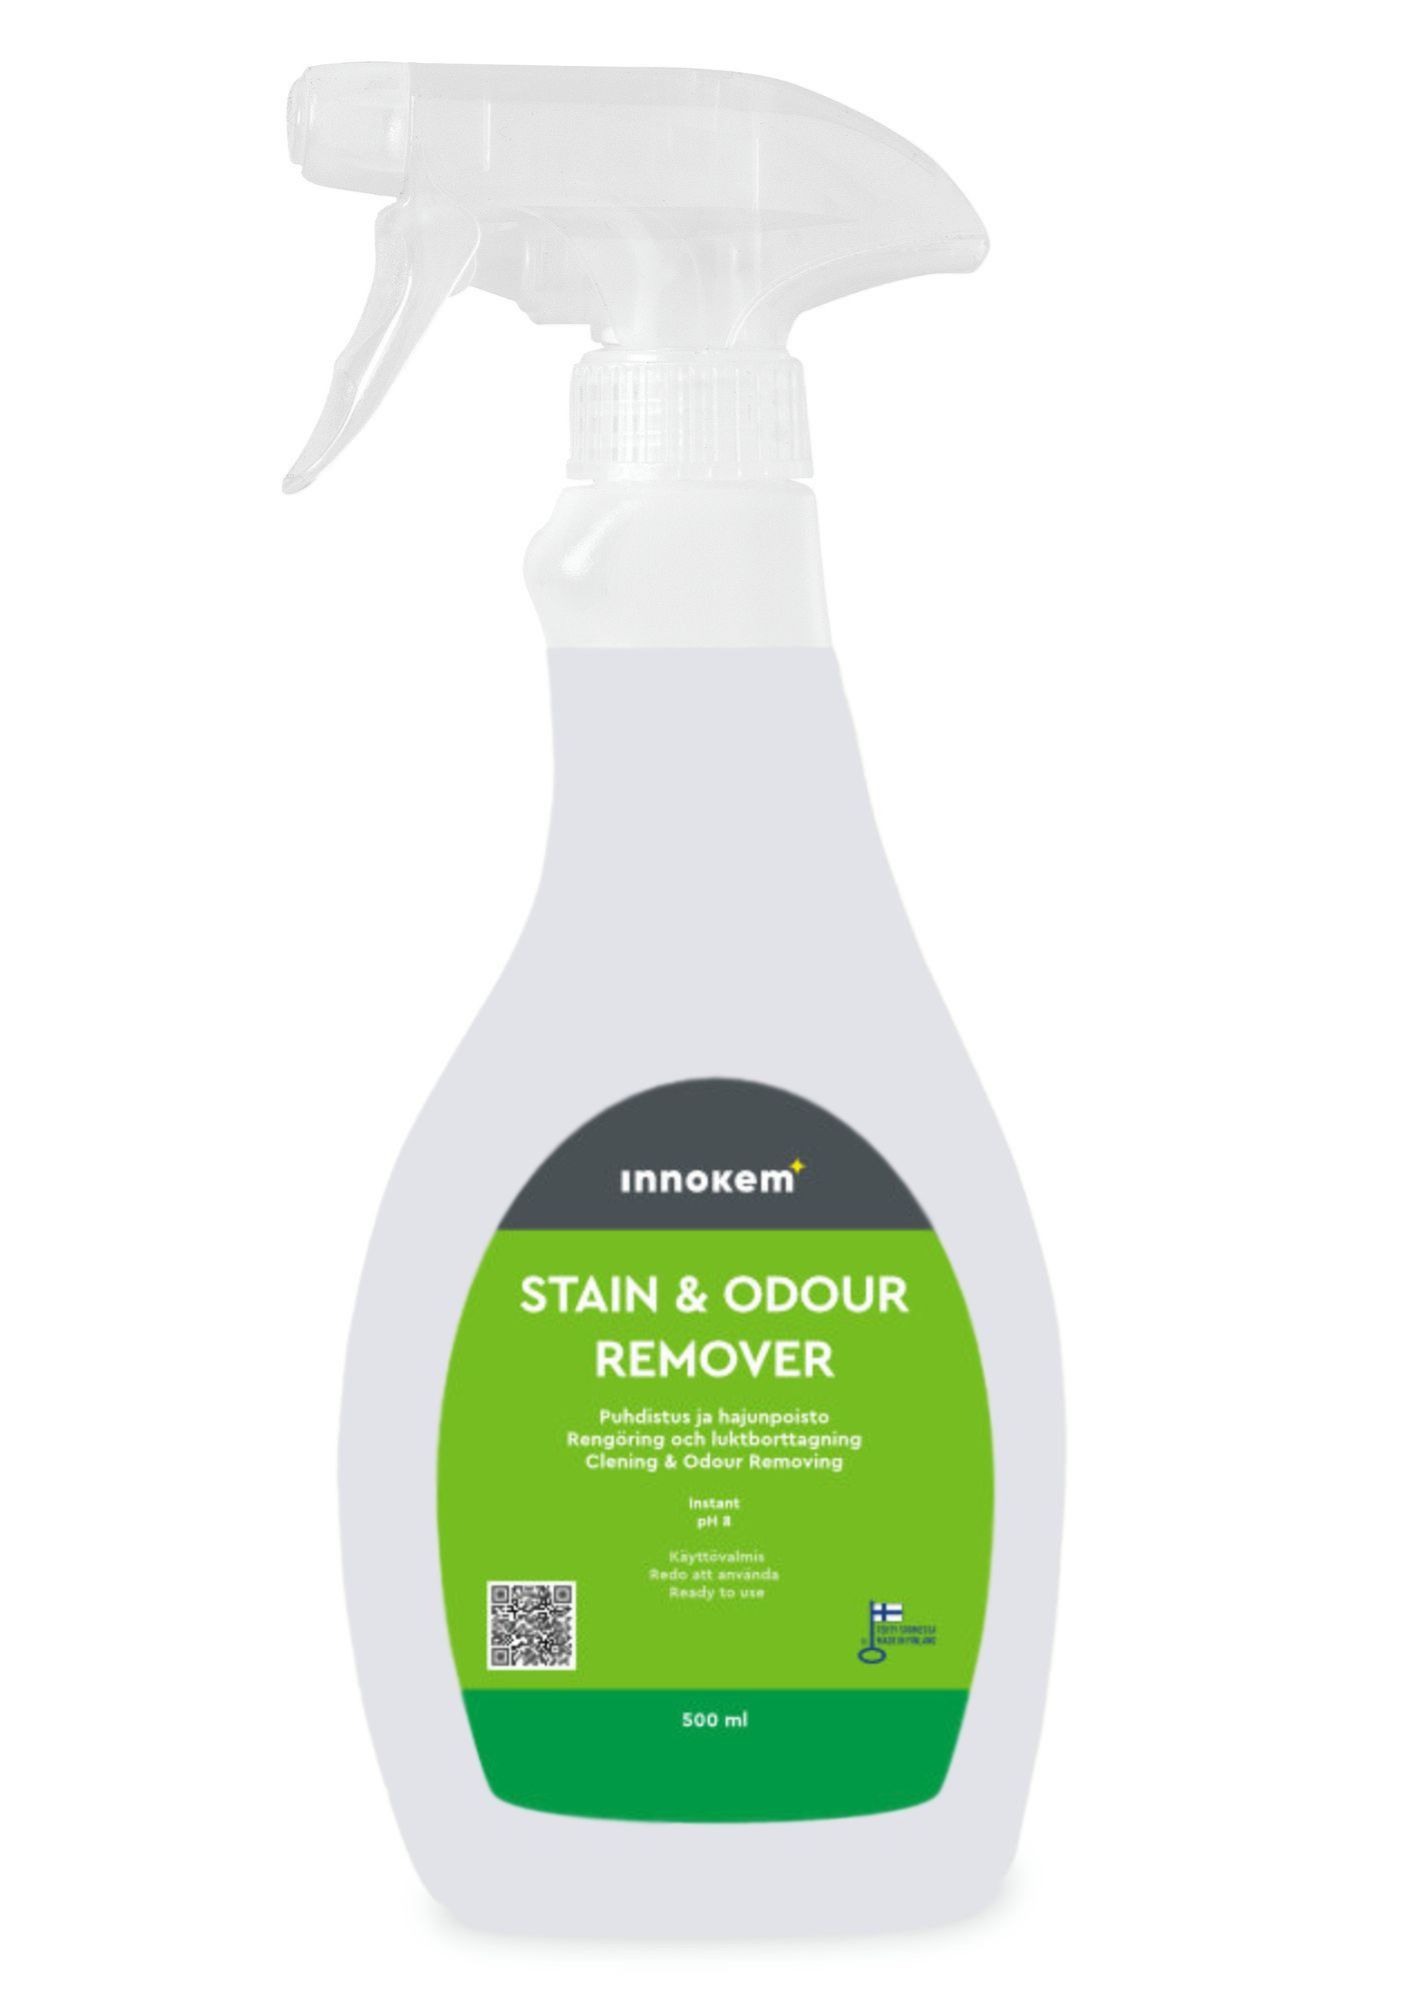 innokem stain & odour remover puhdistusaine 500ml